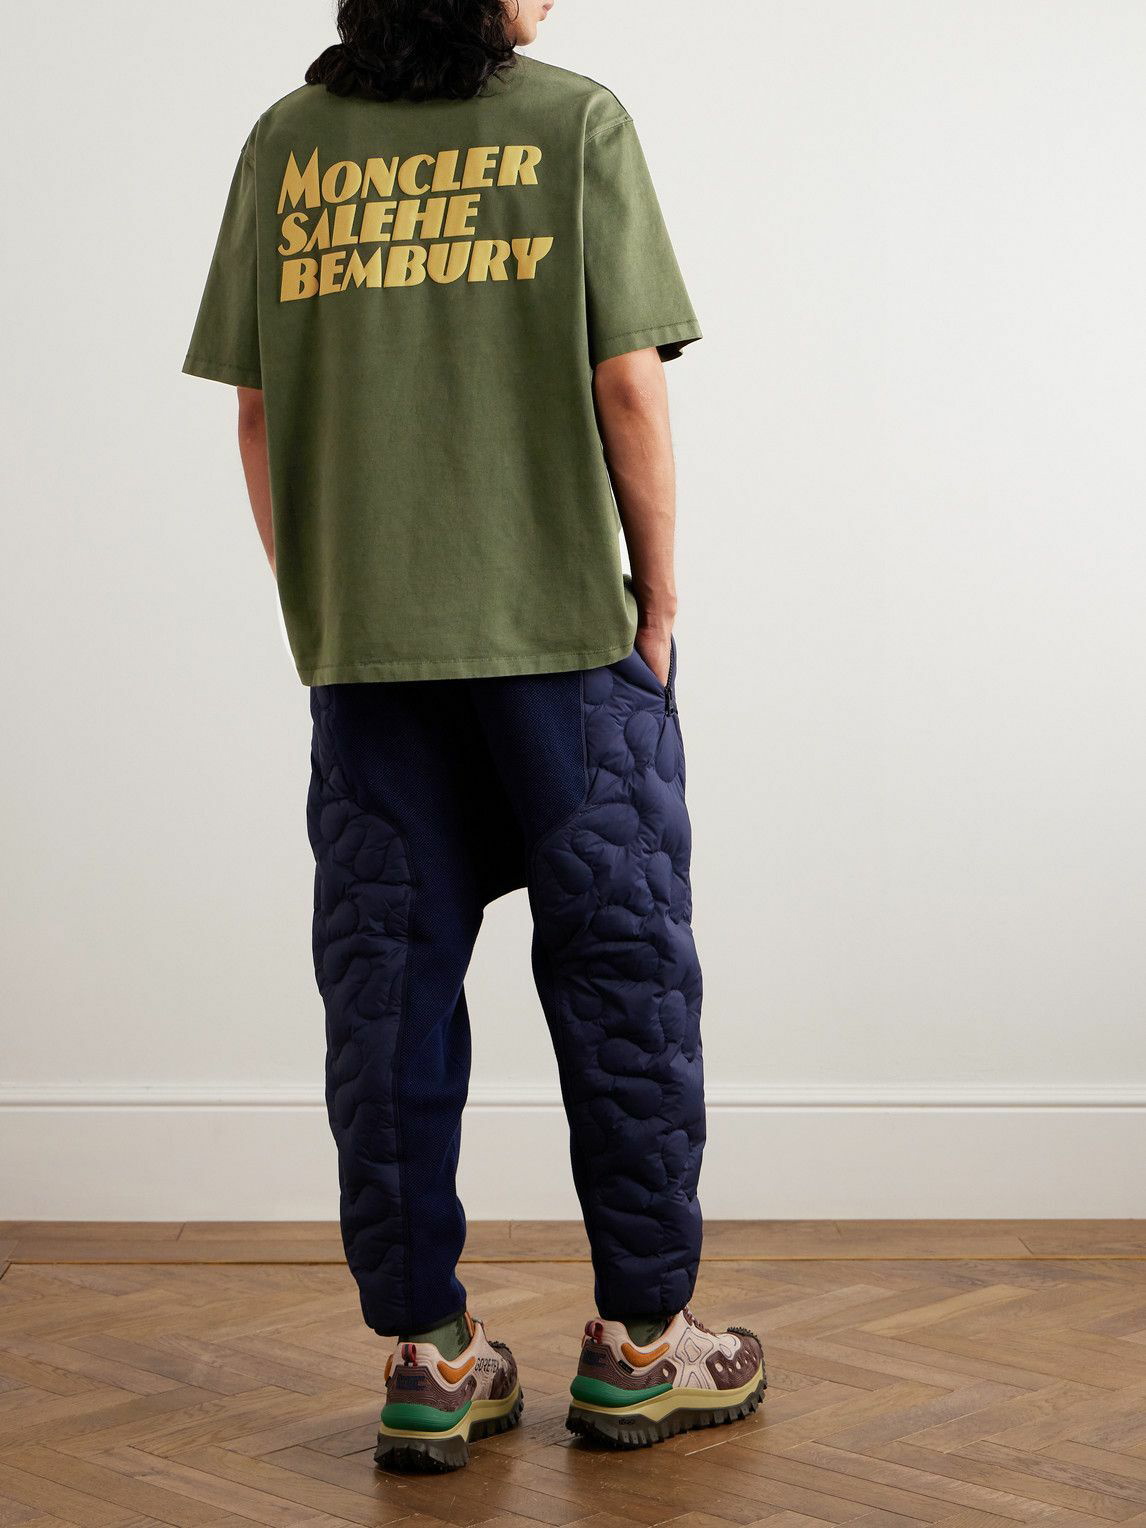 Moncler Genius - Salehe Bembury Logo-Print Cotton-Jersey T-Shirt ...